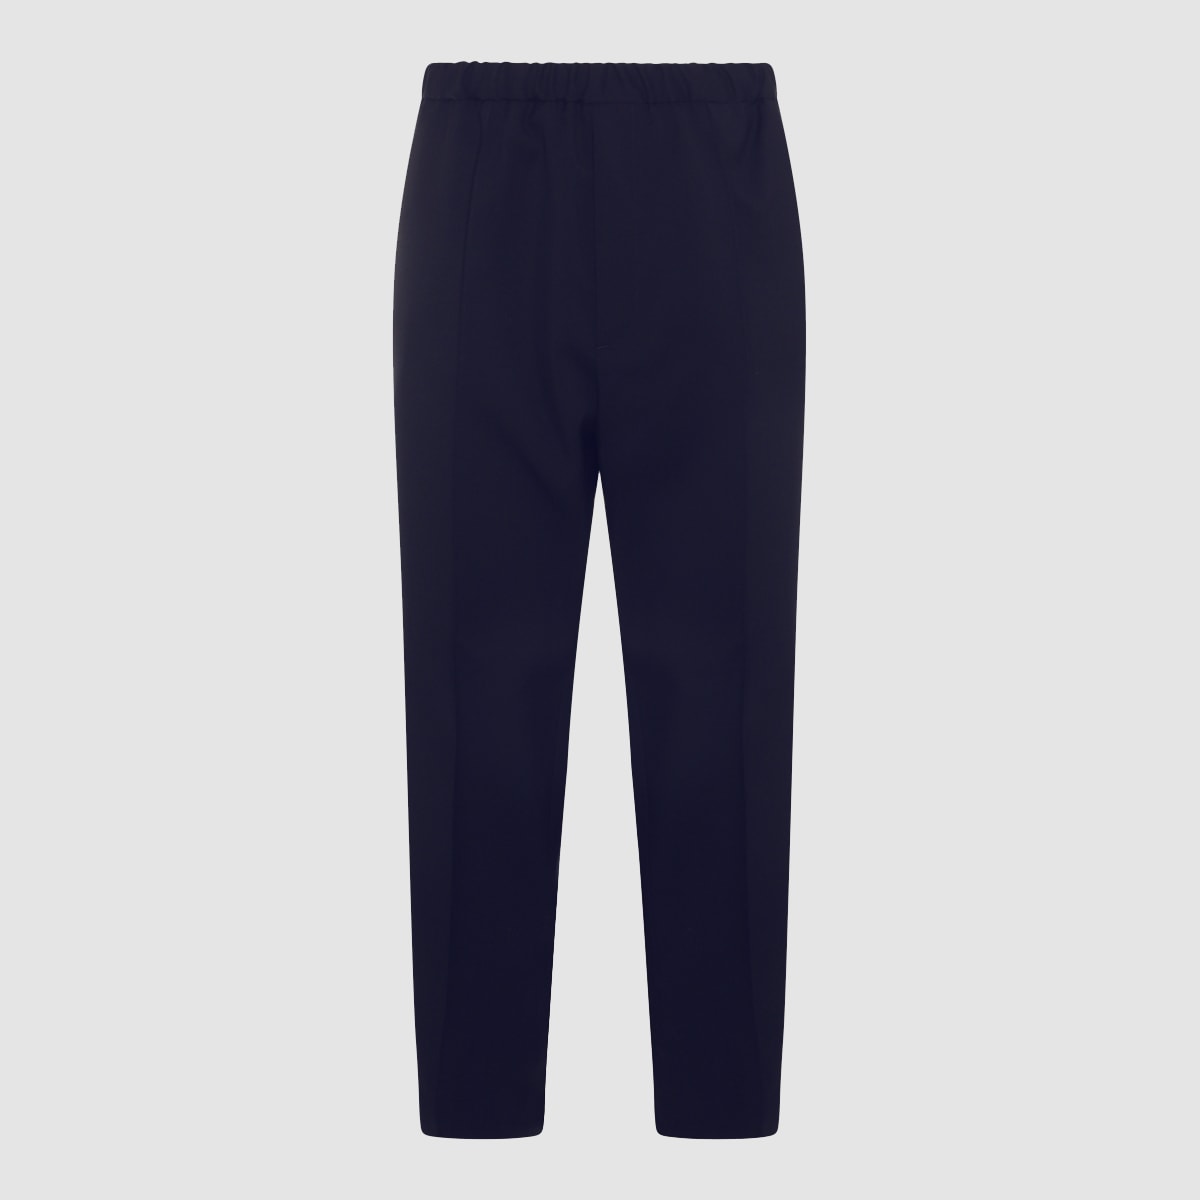 Jil Sander Navy Blue Cotton Trousers